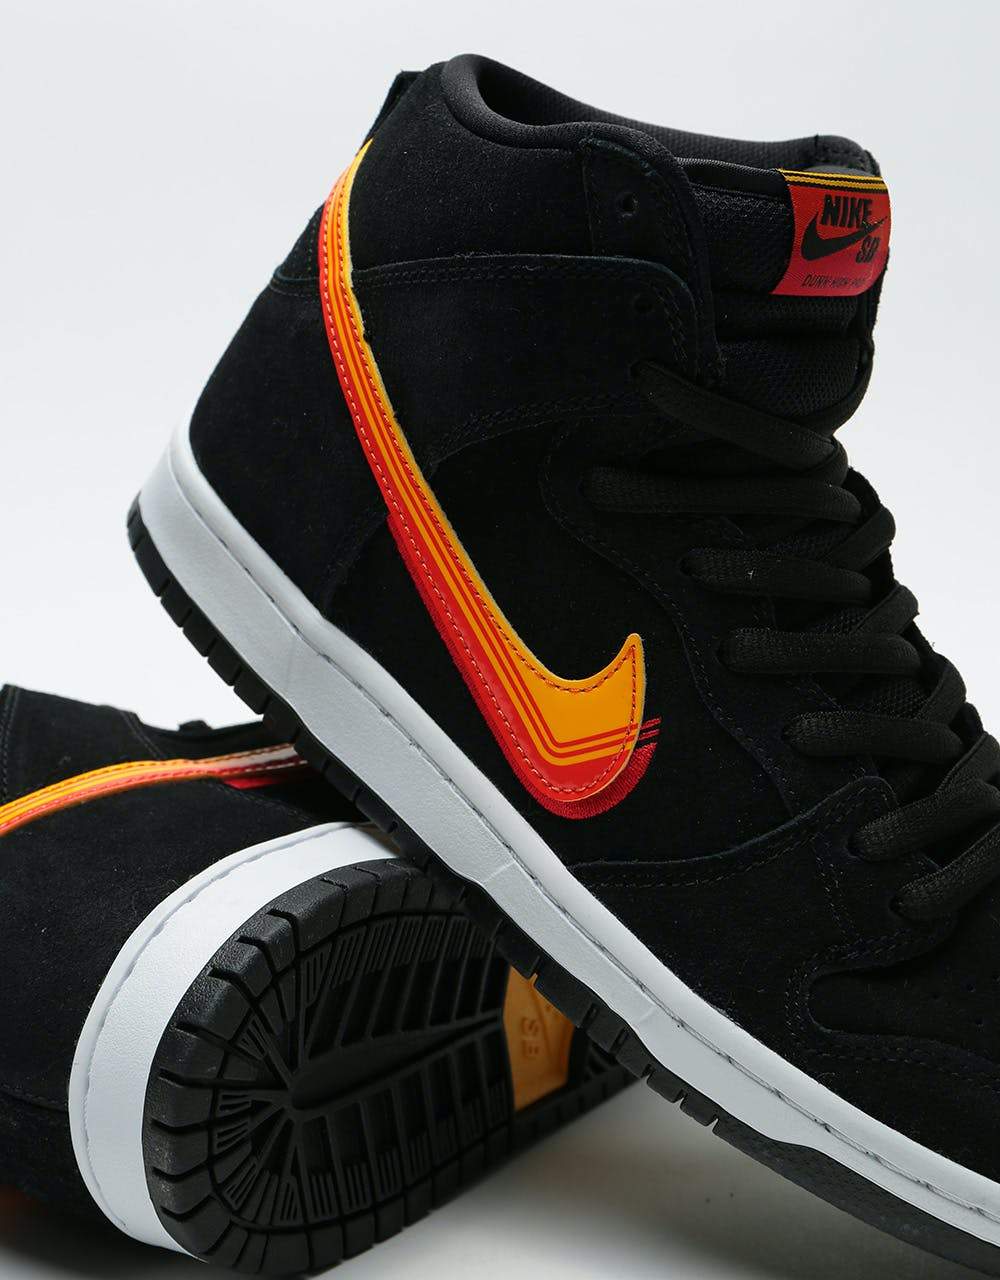 Nike SB Dunk High Pro Skate Shoes - Black/University Gold-Team Orange